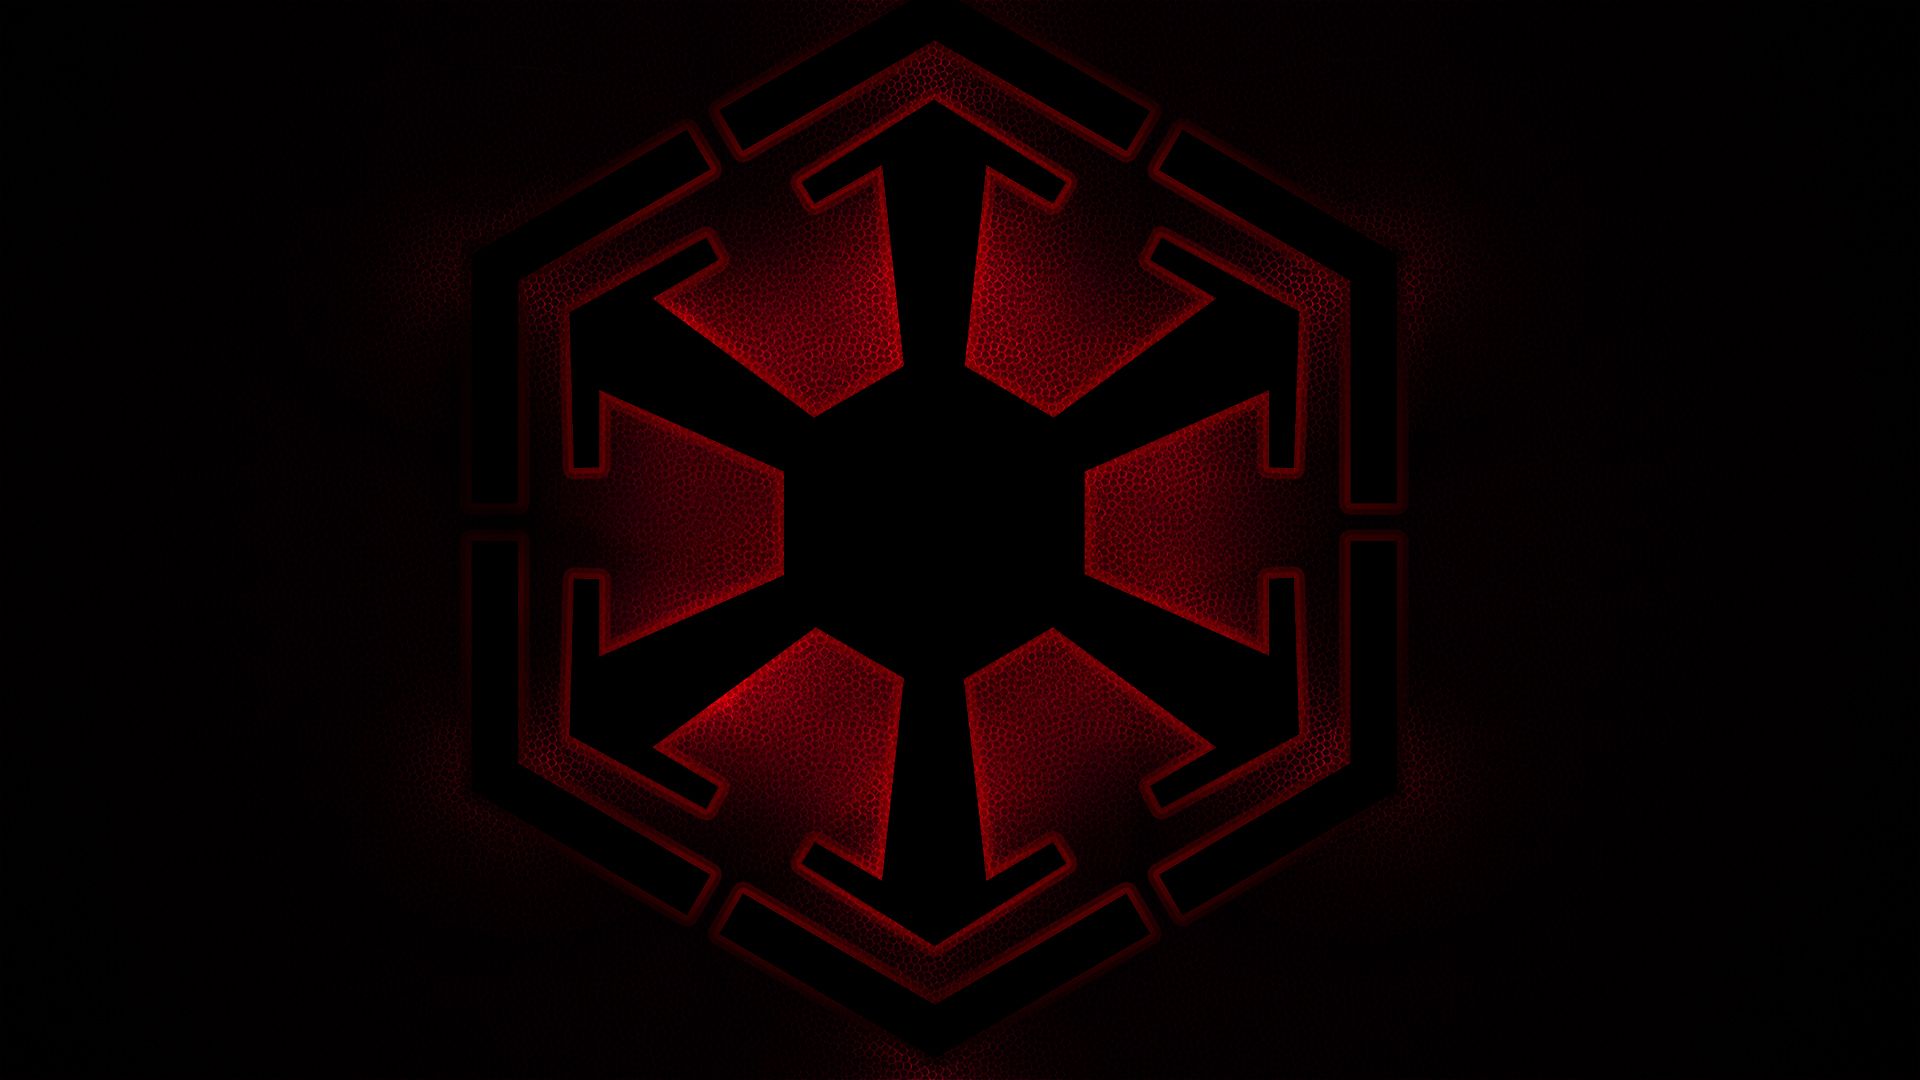 Image result for sith symbol. Star wars wallpaper, Star wars background, Star wars sith